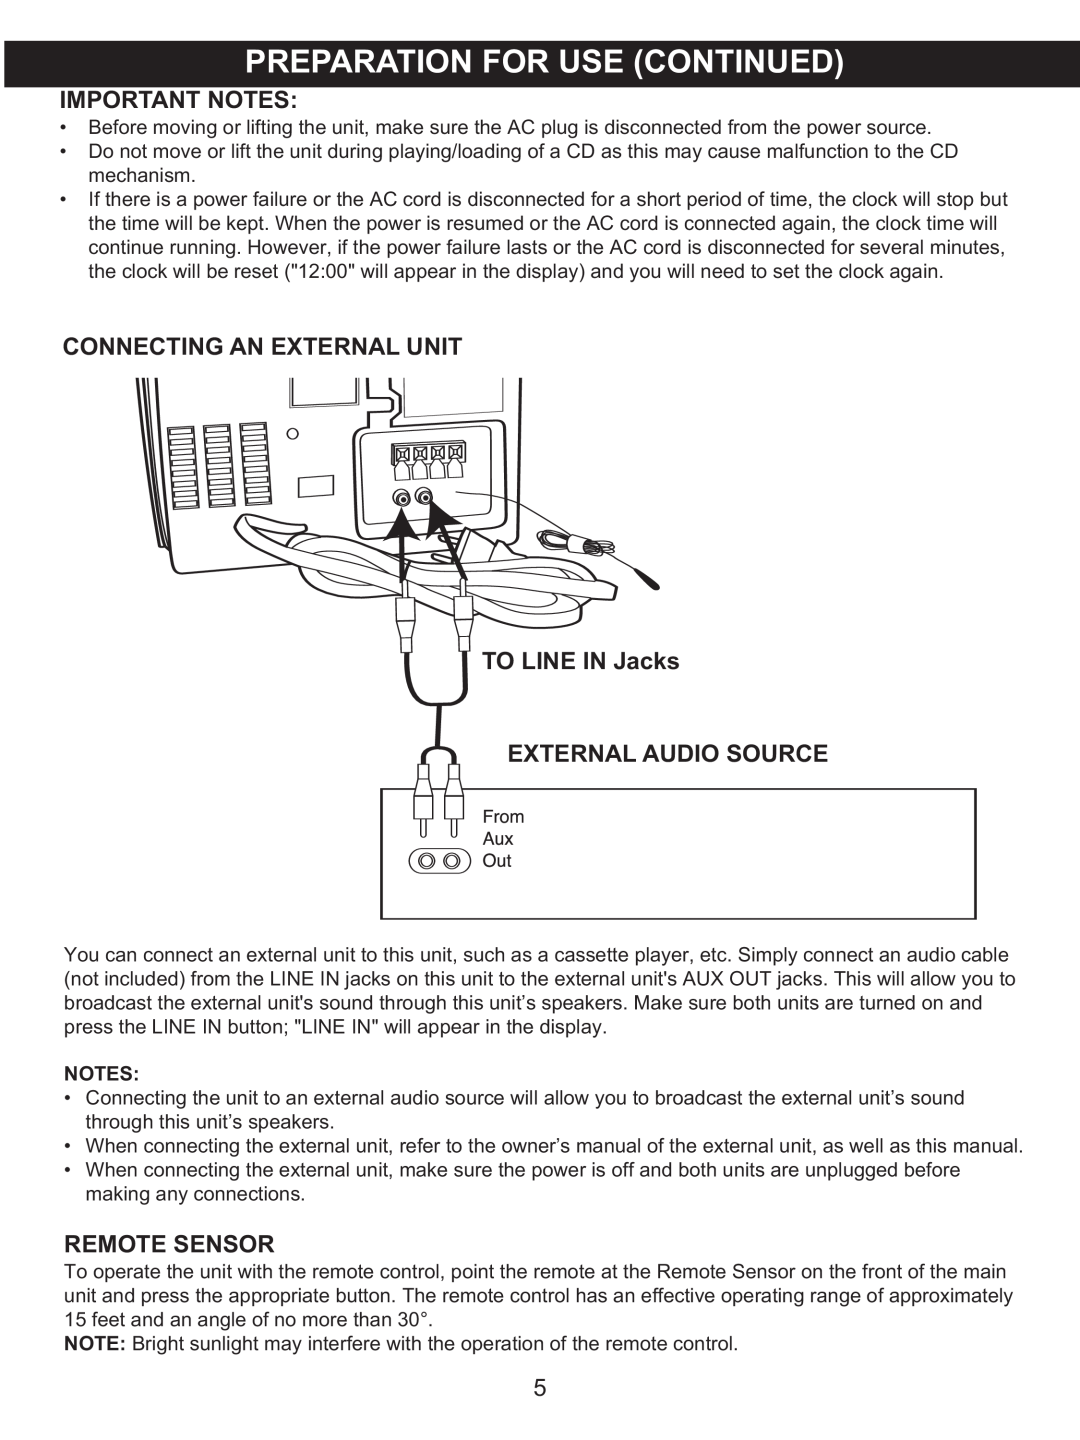 Memorex MX4137 manual Important Notes, CONNECTING AN EXTERNAL UNIT TO LINE IN Jacks, External Audio Source, Remote Sensor 